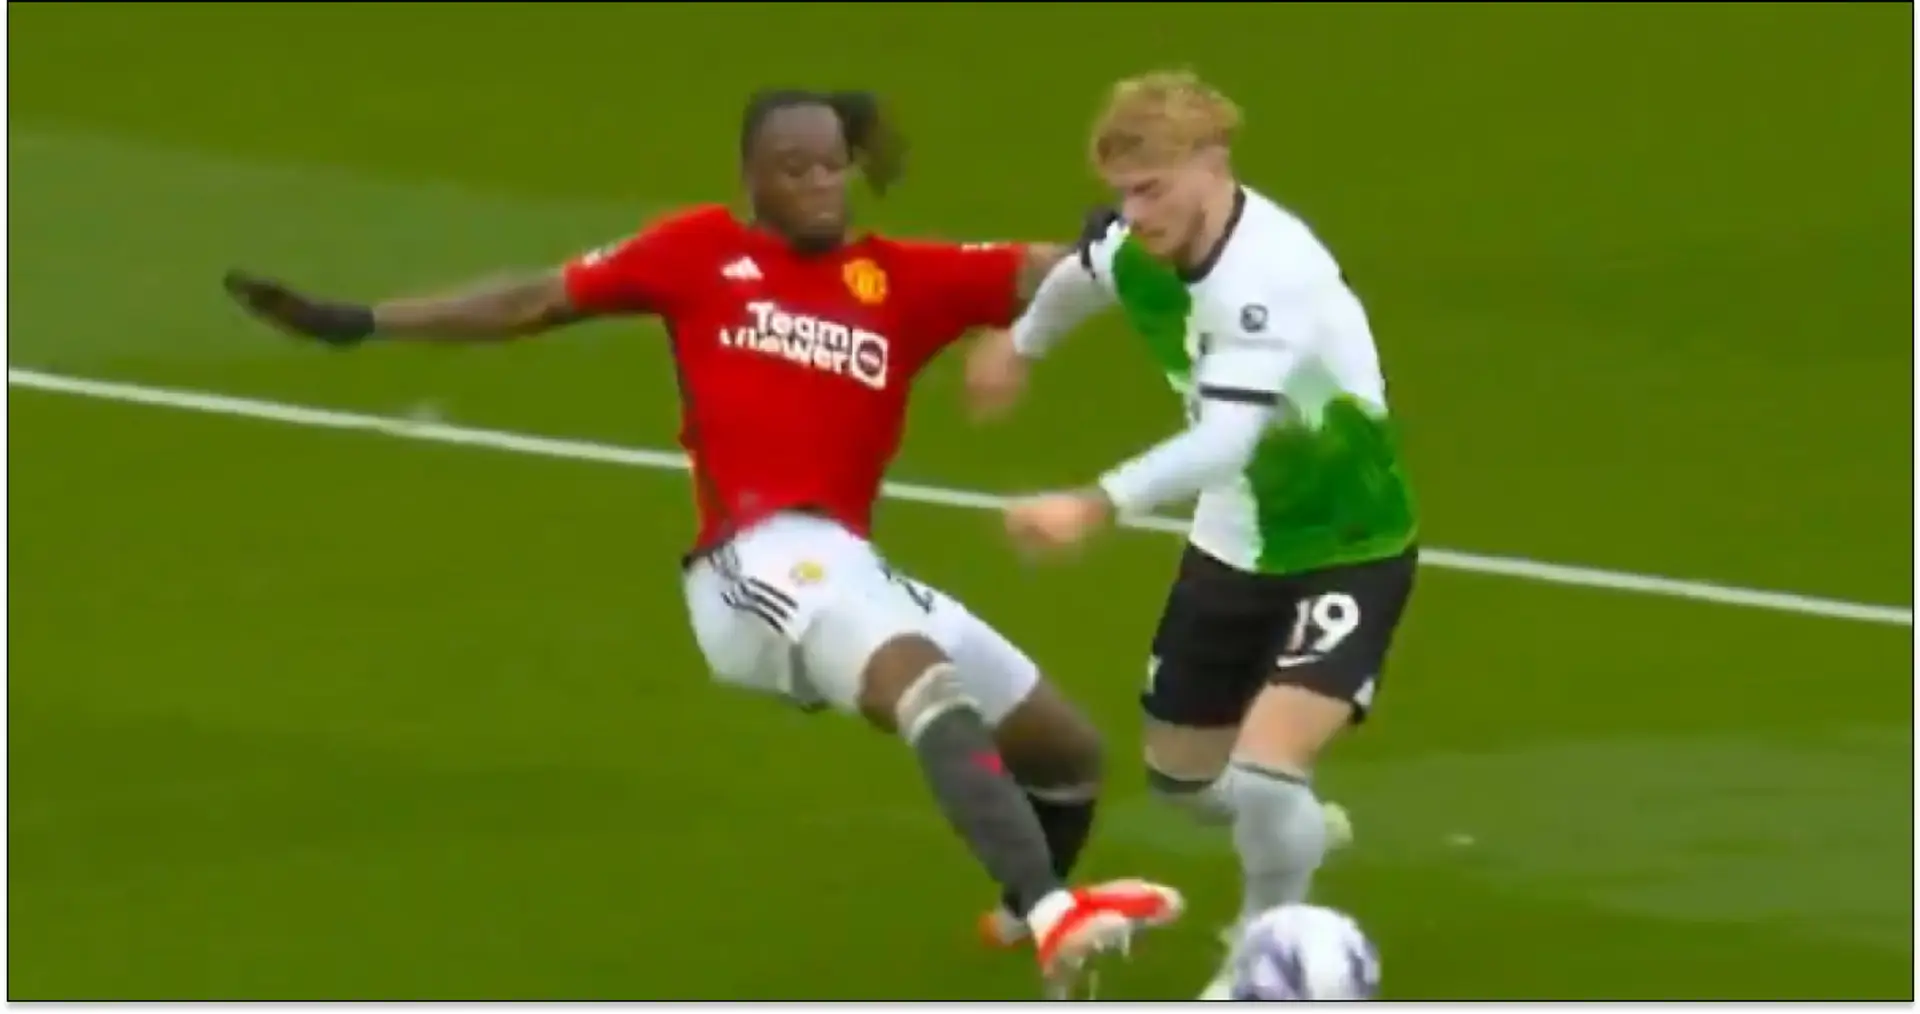 'Absolute joke': Man United fans accuse Elliott of diving for penalty 